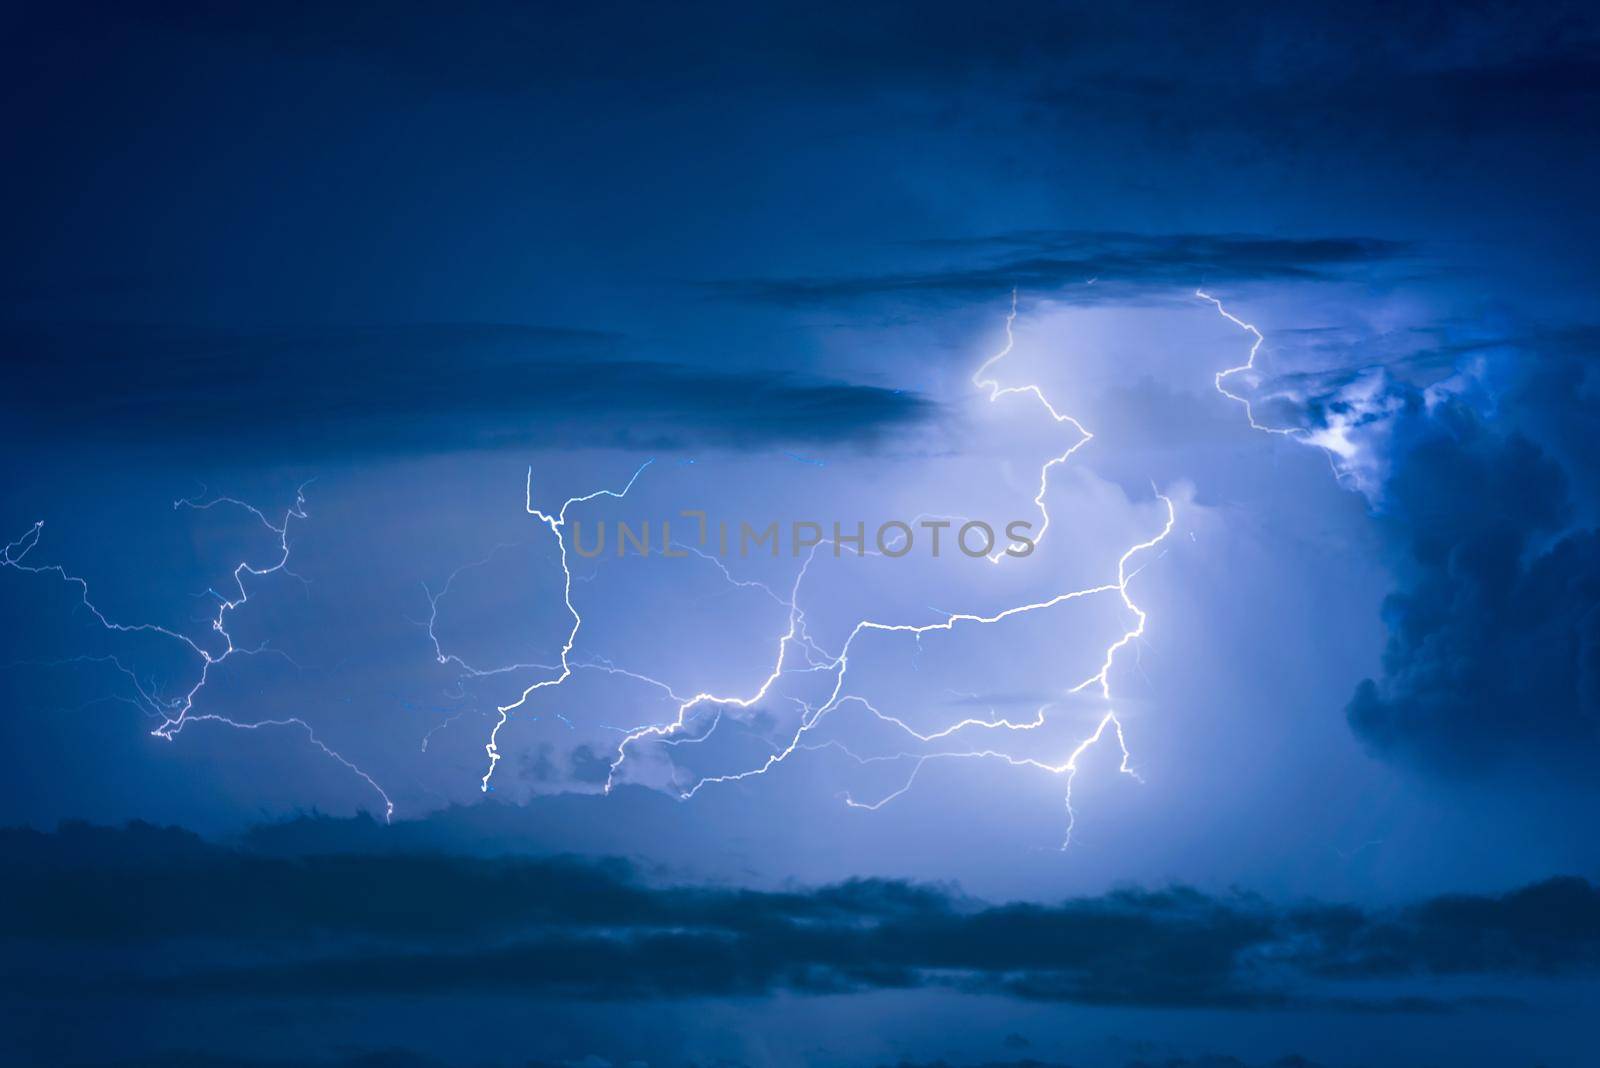 Thunder storm lightning strike on the dark cloudy sky background at night. by Nuamfolio